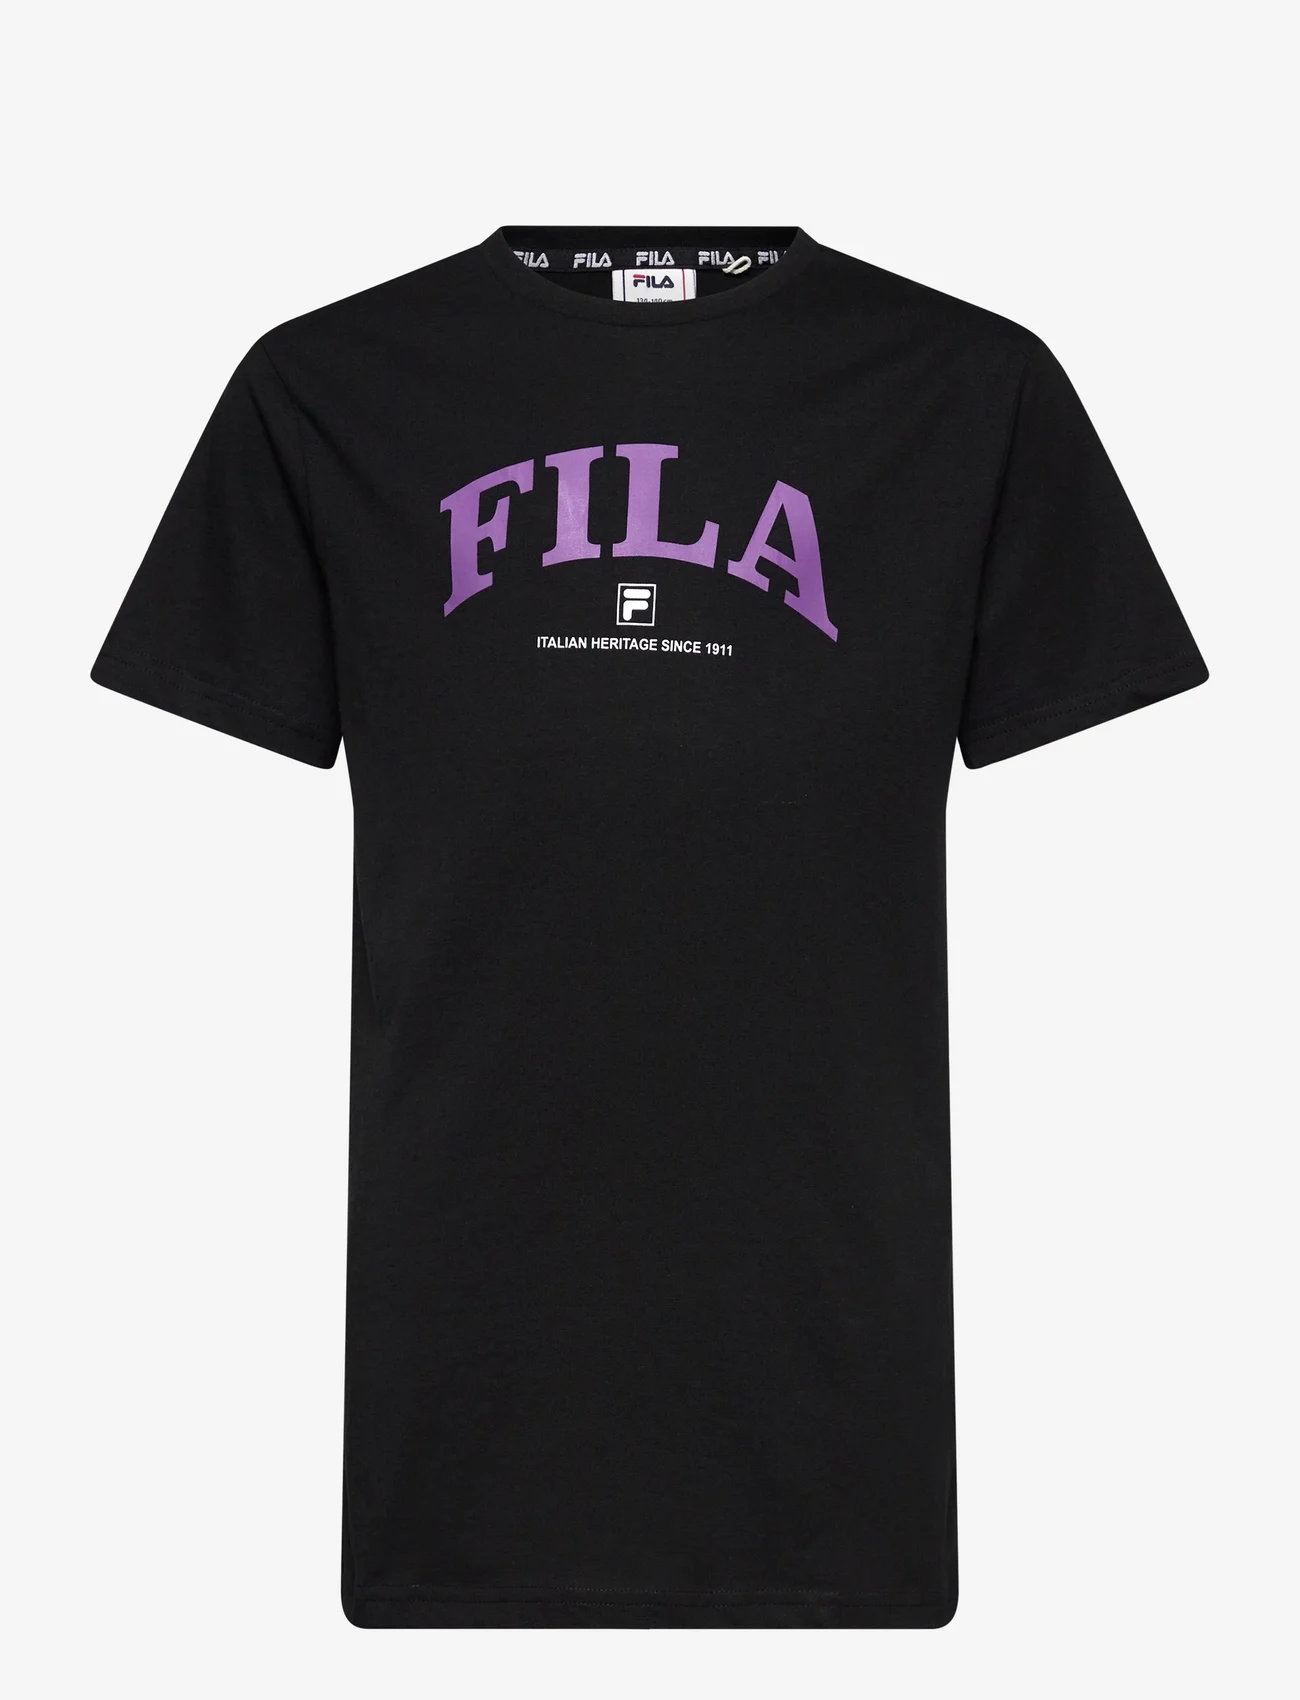 FILA - LATHEN graphic tee dress - kortärmade t-shirts - black - 0